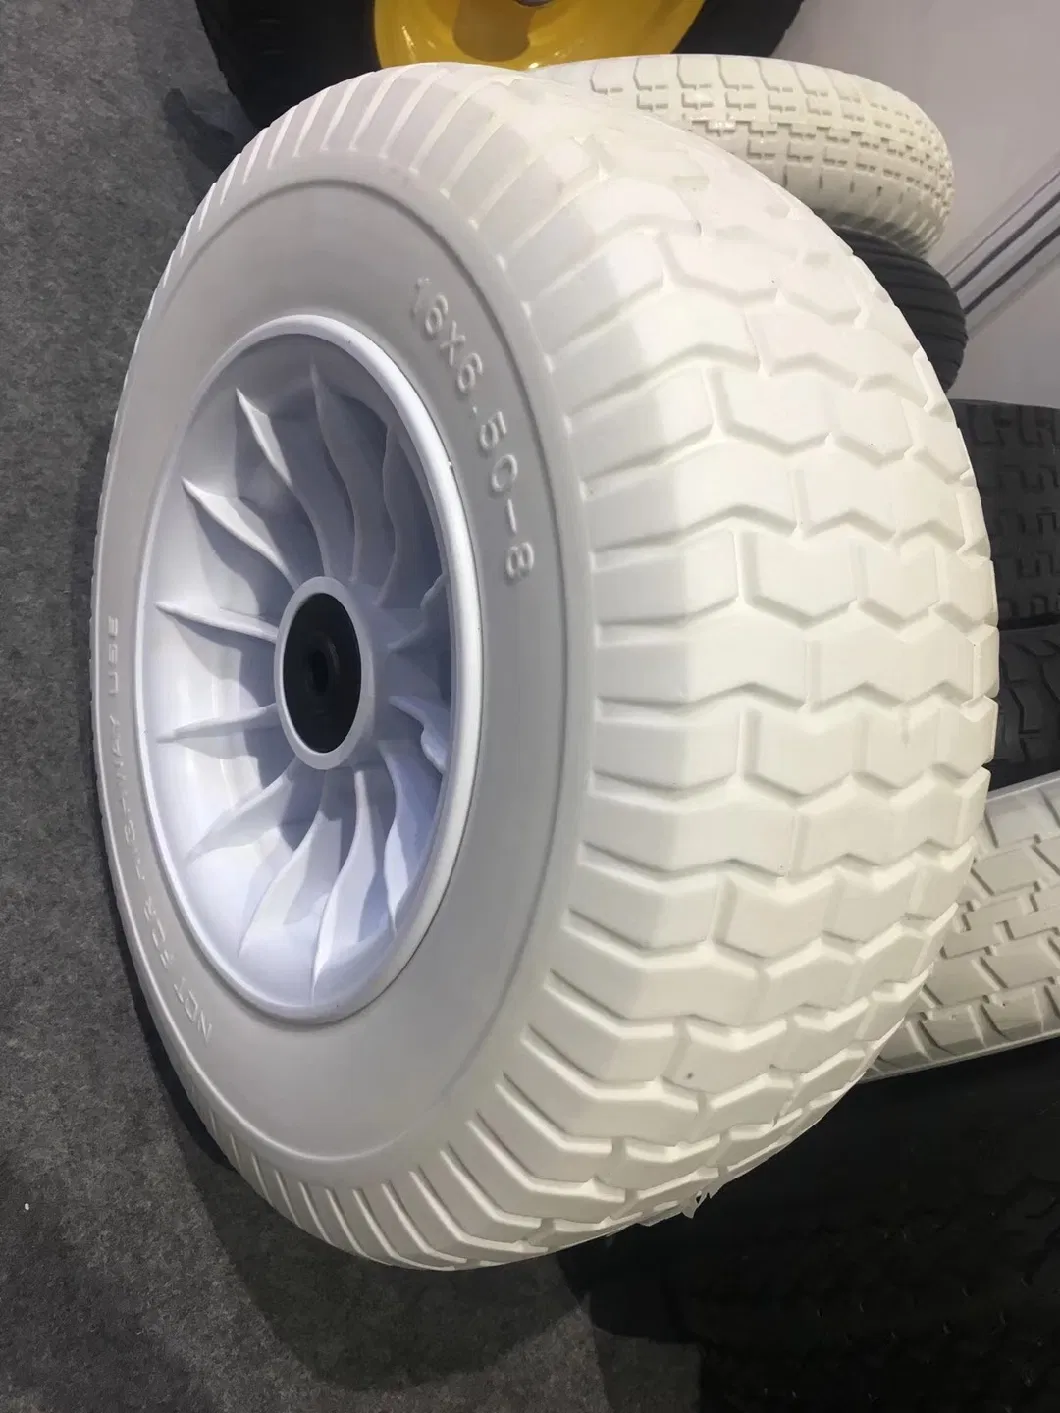 12 Inch Flat Free PU Foam Wheel for Golf Cart